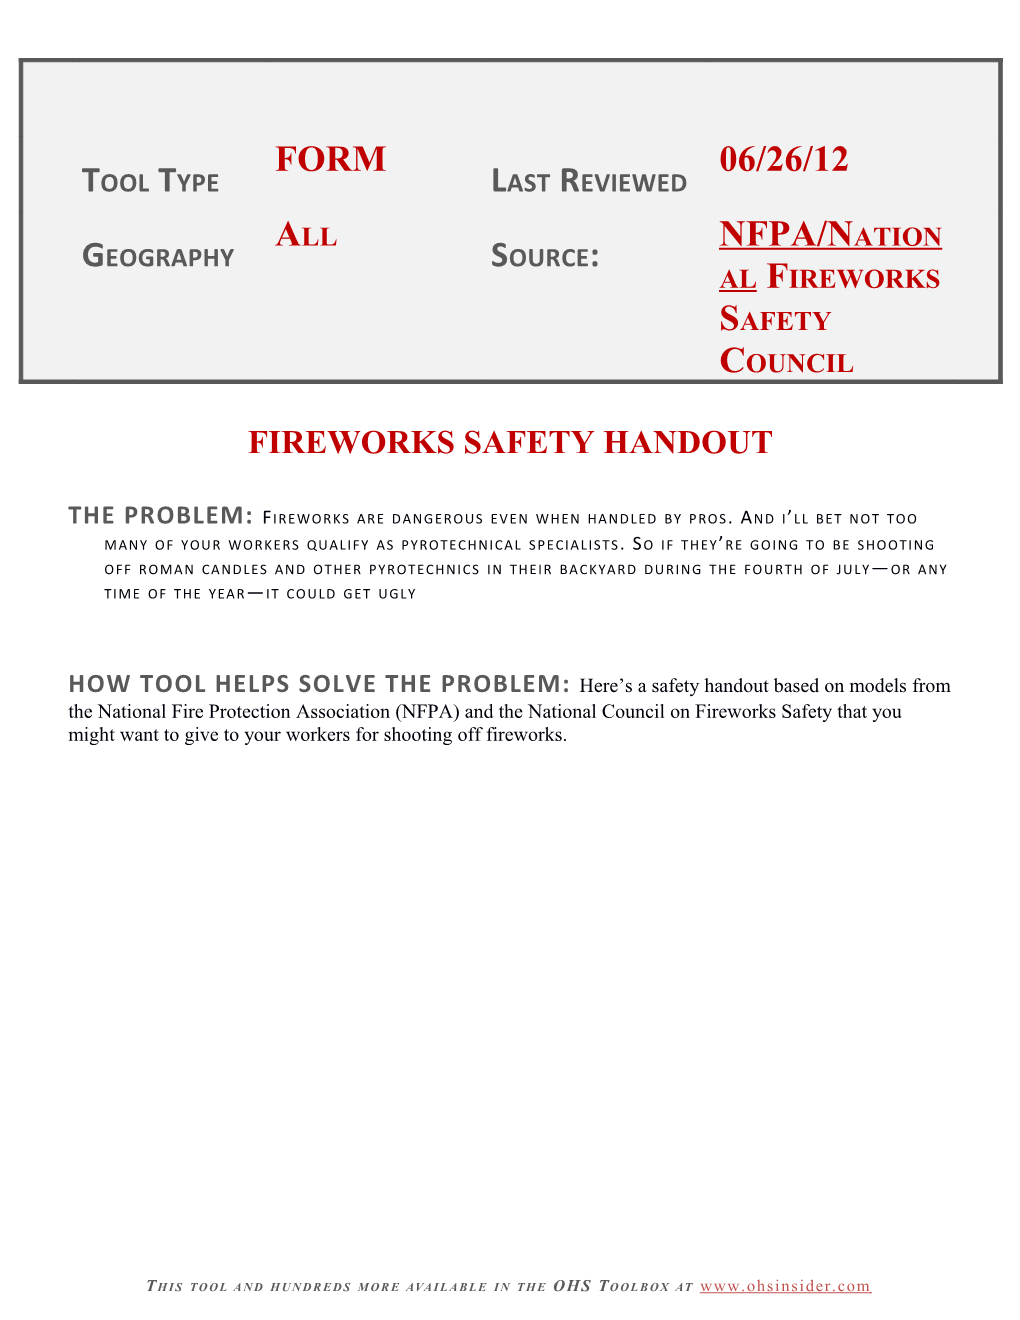 Fireworks Safety Handout